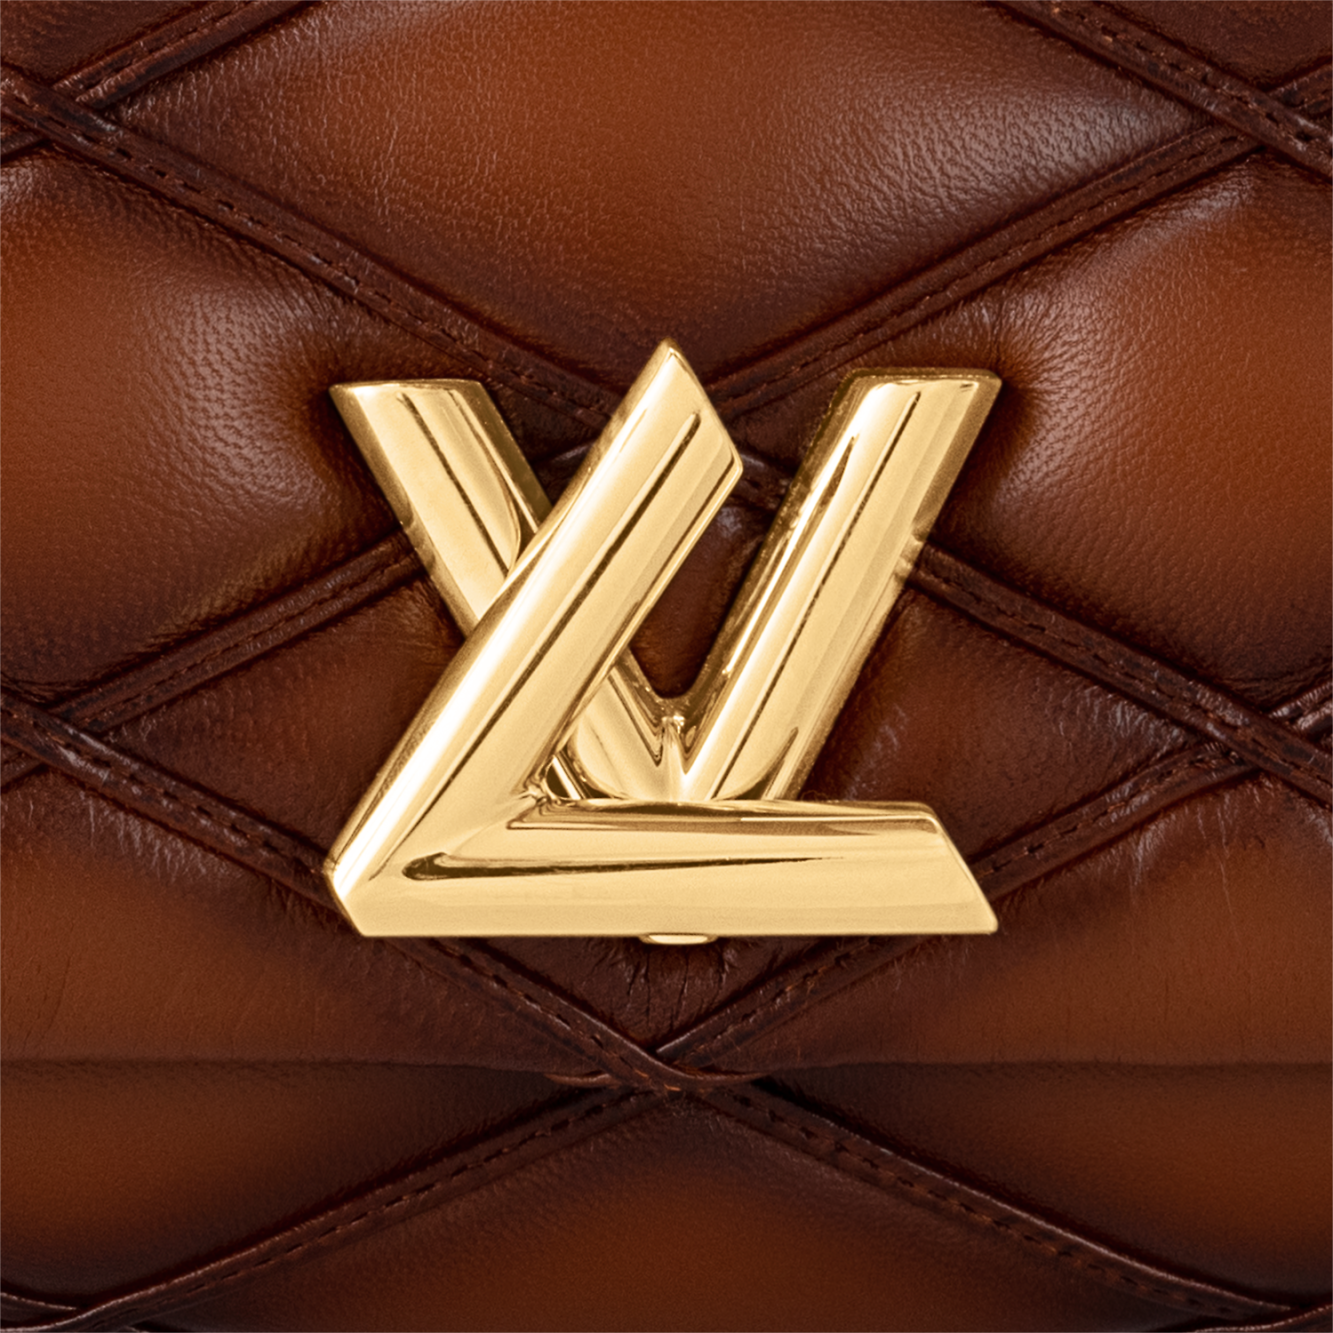 Louis Vuitton Carry All MM Bag - Vitkac shop online